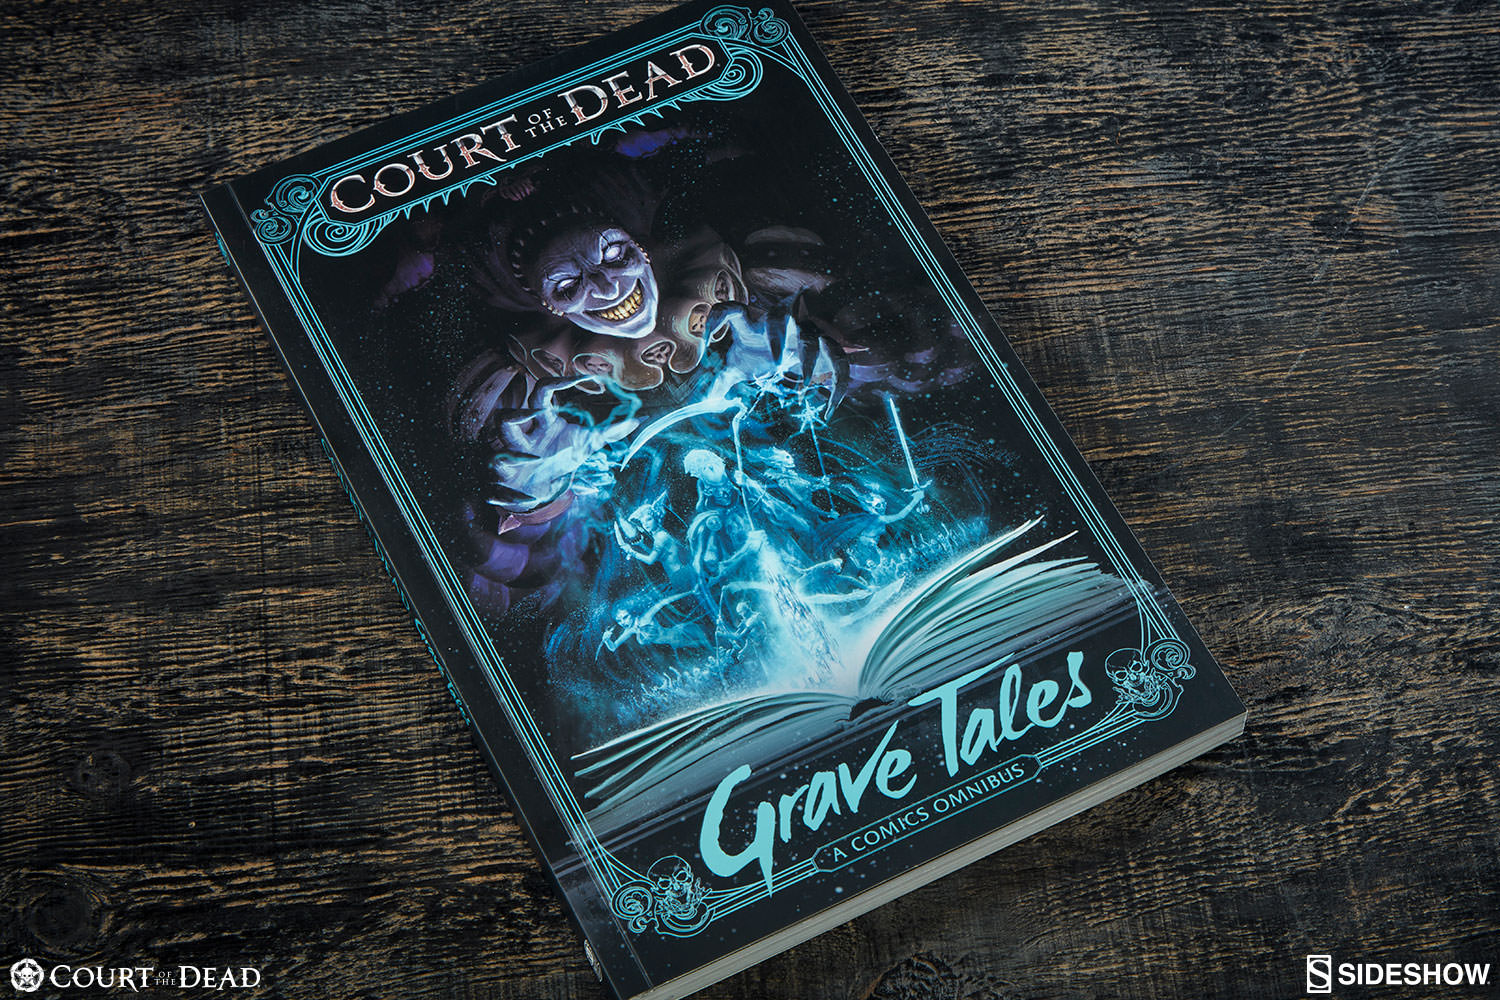 Sideshow Court of the Dead Books, Comics, Prints... Court-of-the-dead-grave-tales-a-comics-monibus-book-500527-01